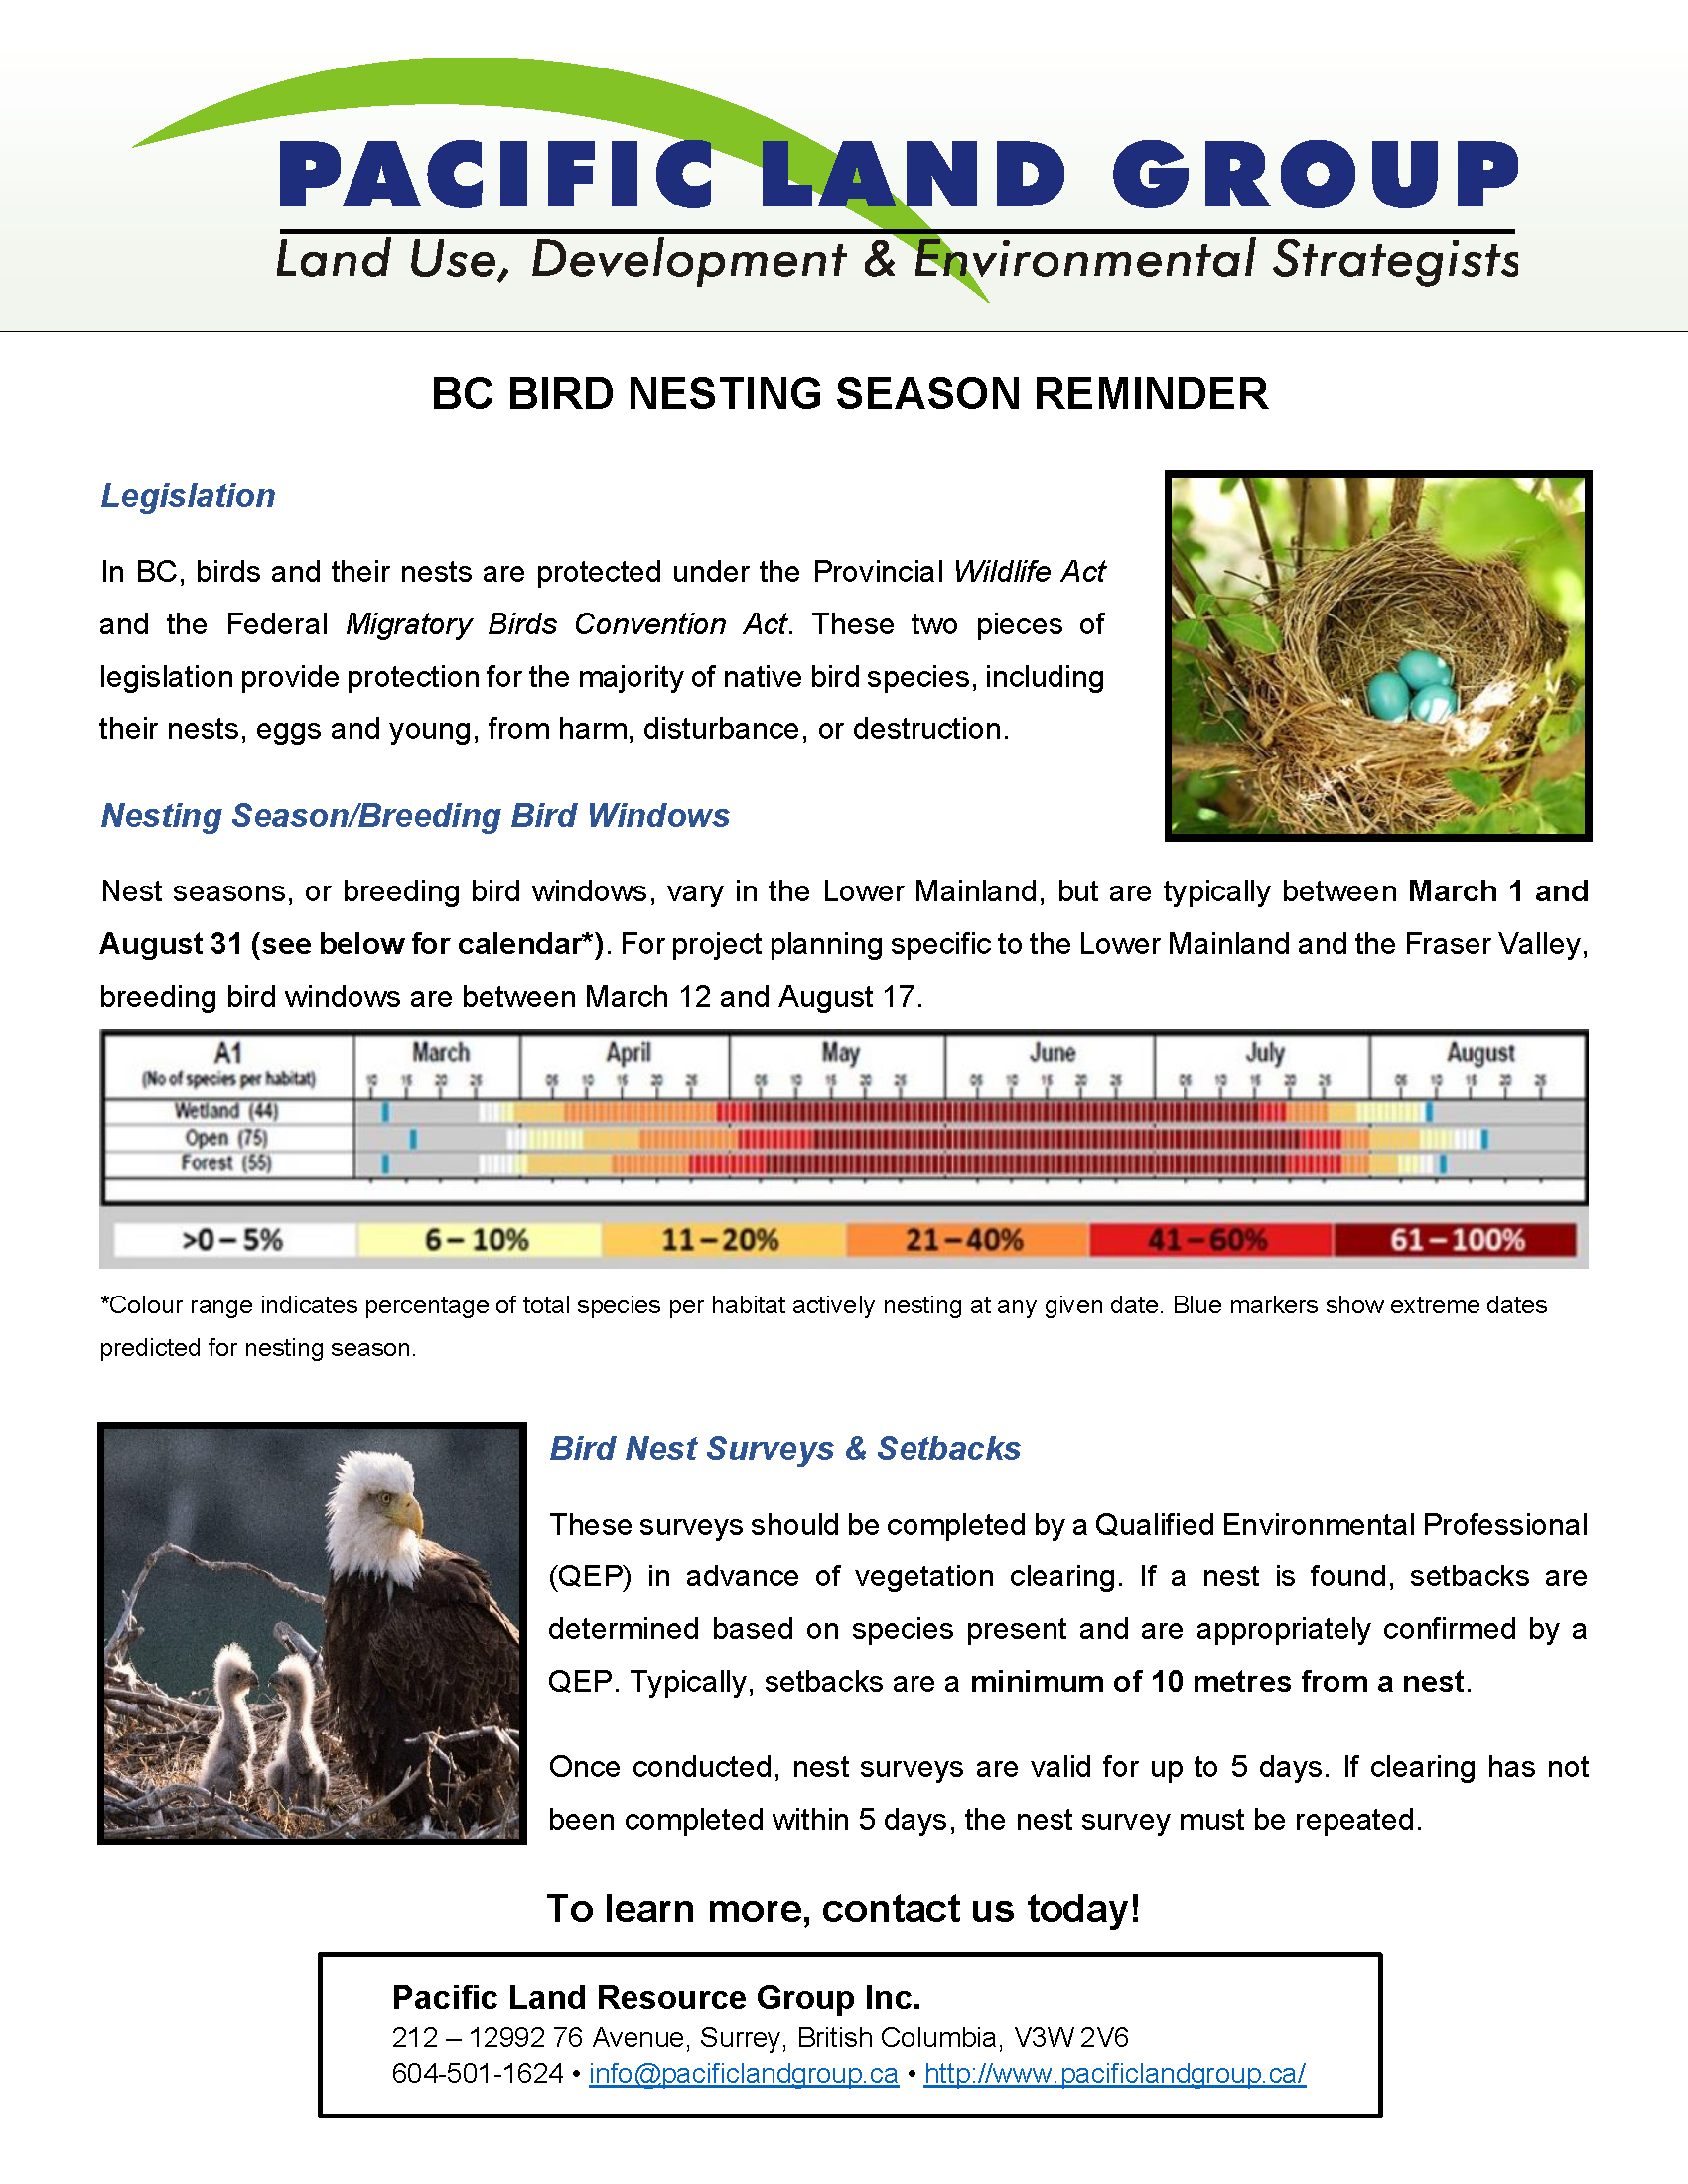 bird nesting season reminder